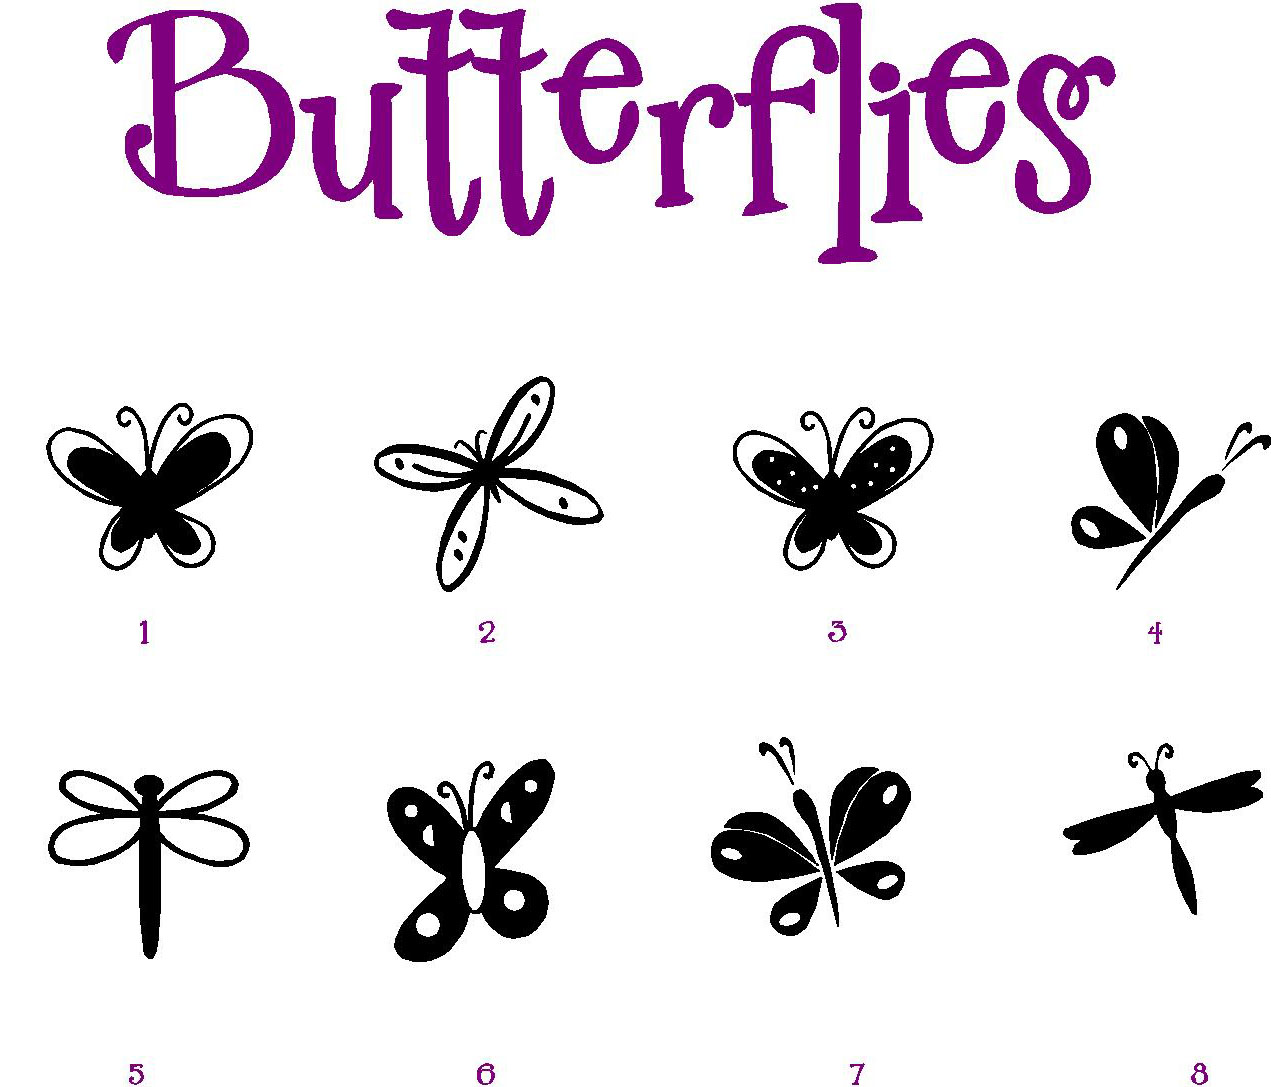 [buterflies.jpg]